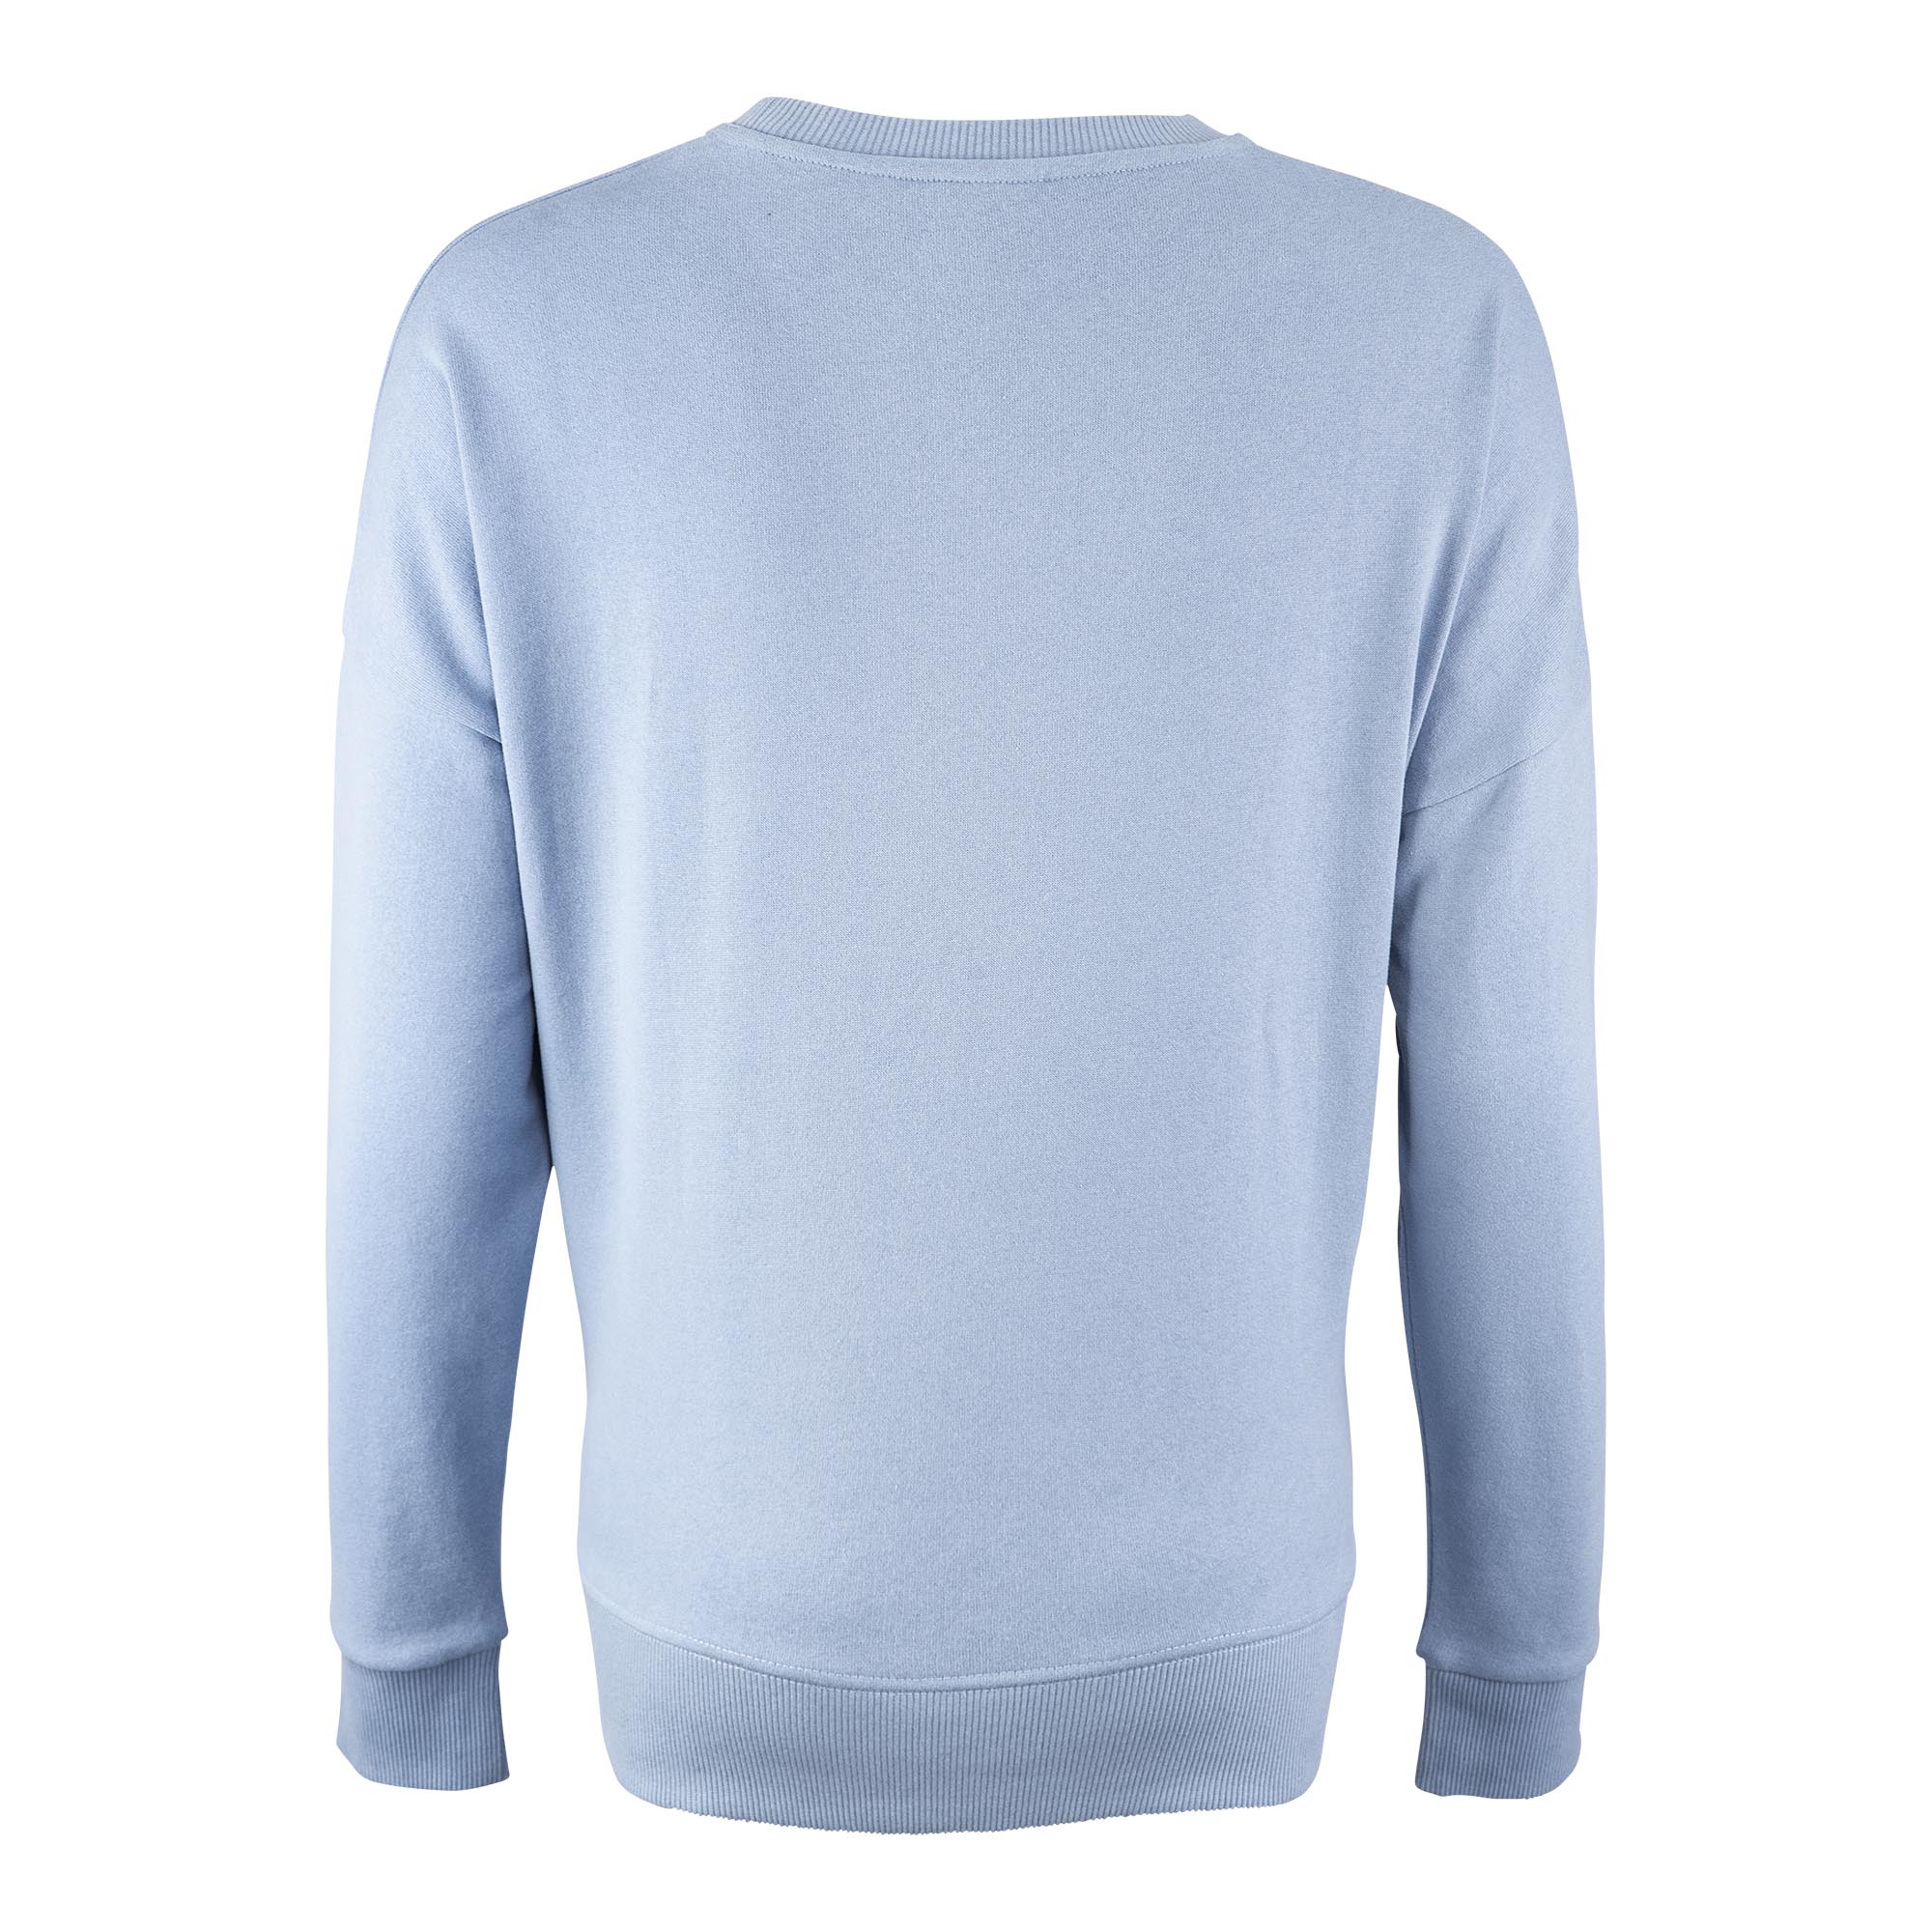 Sweatshirt Damen Home blue